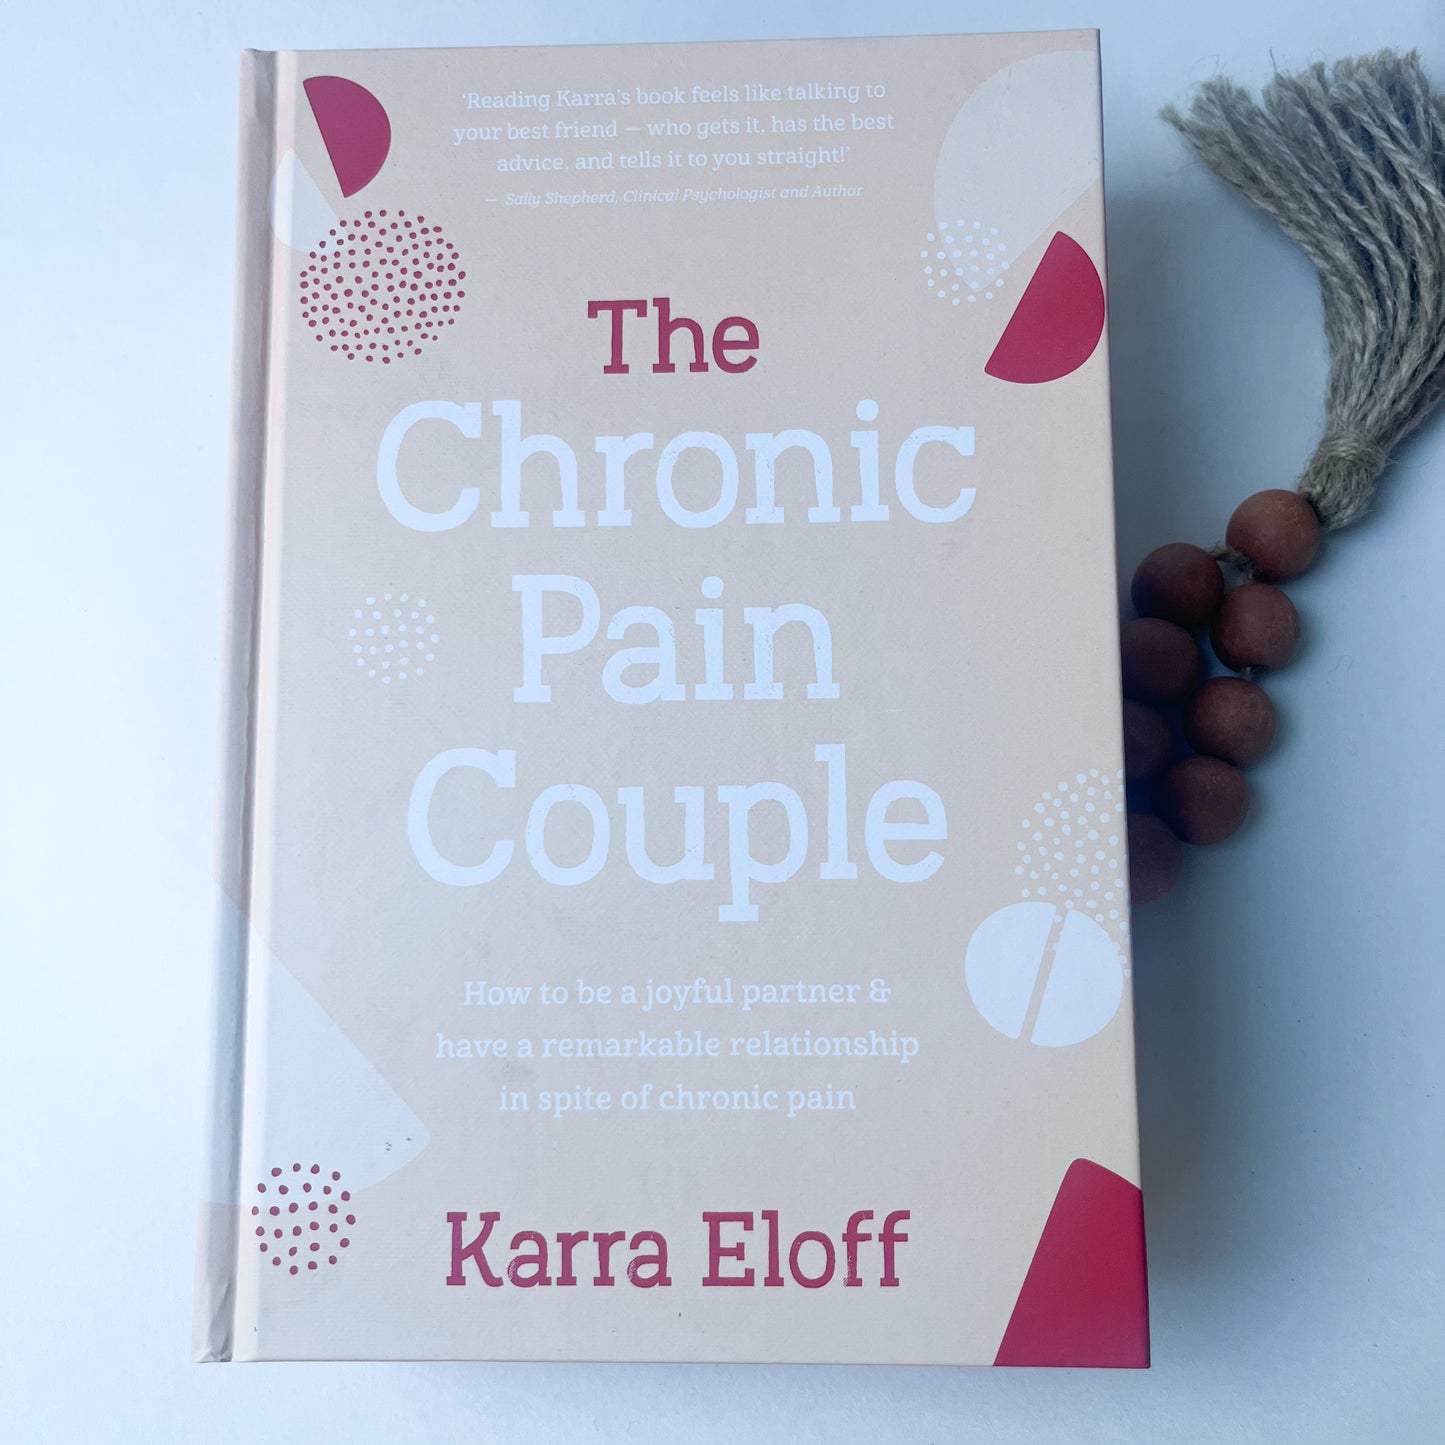 The Chronic Pain Couple - Karra Eloff